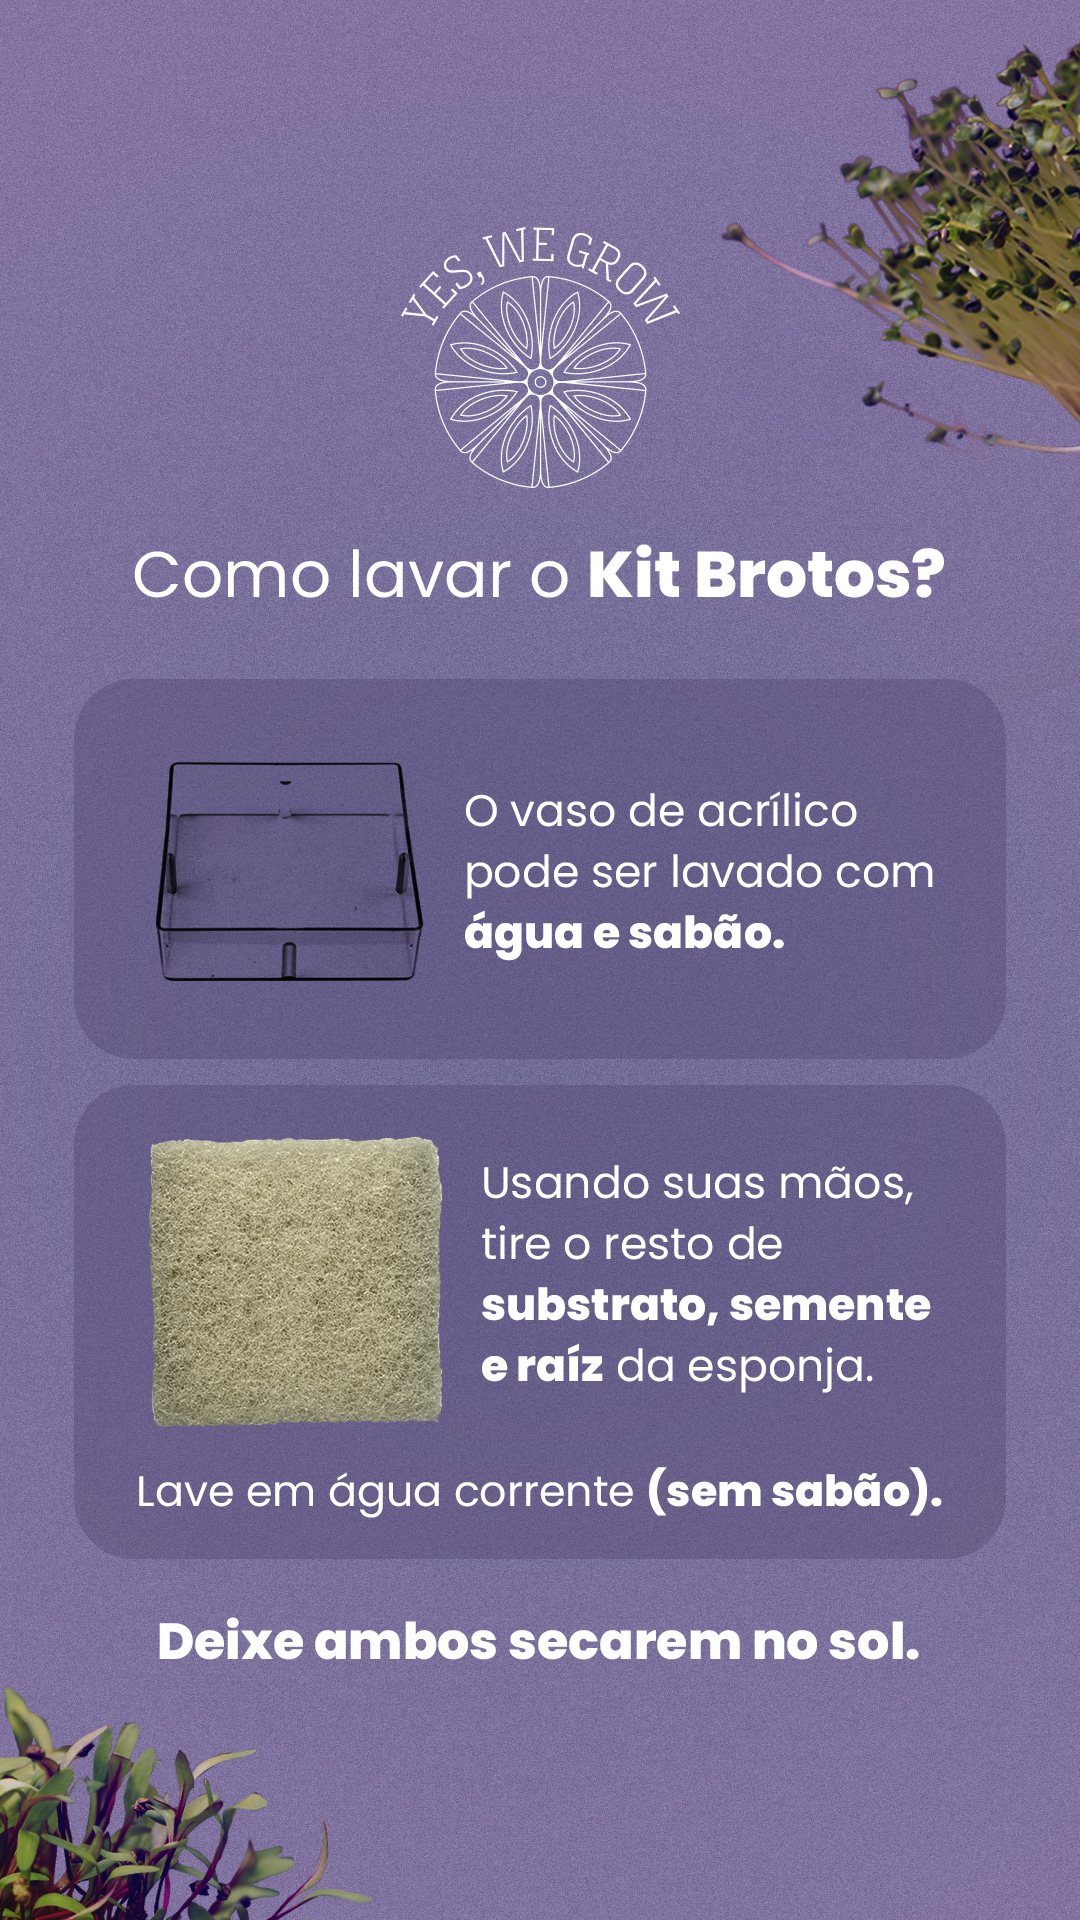 story_destaque_lavar_kit_brotos.jpg